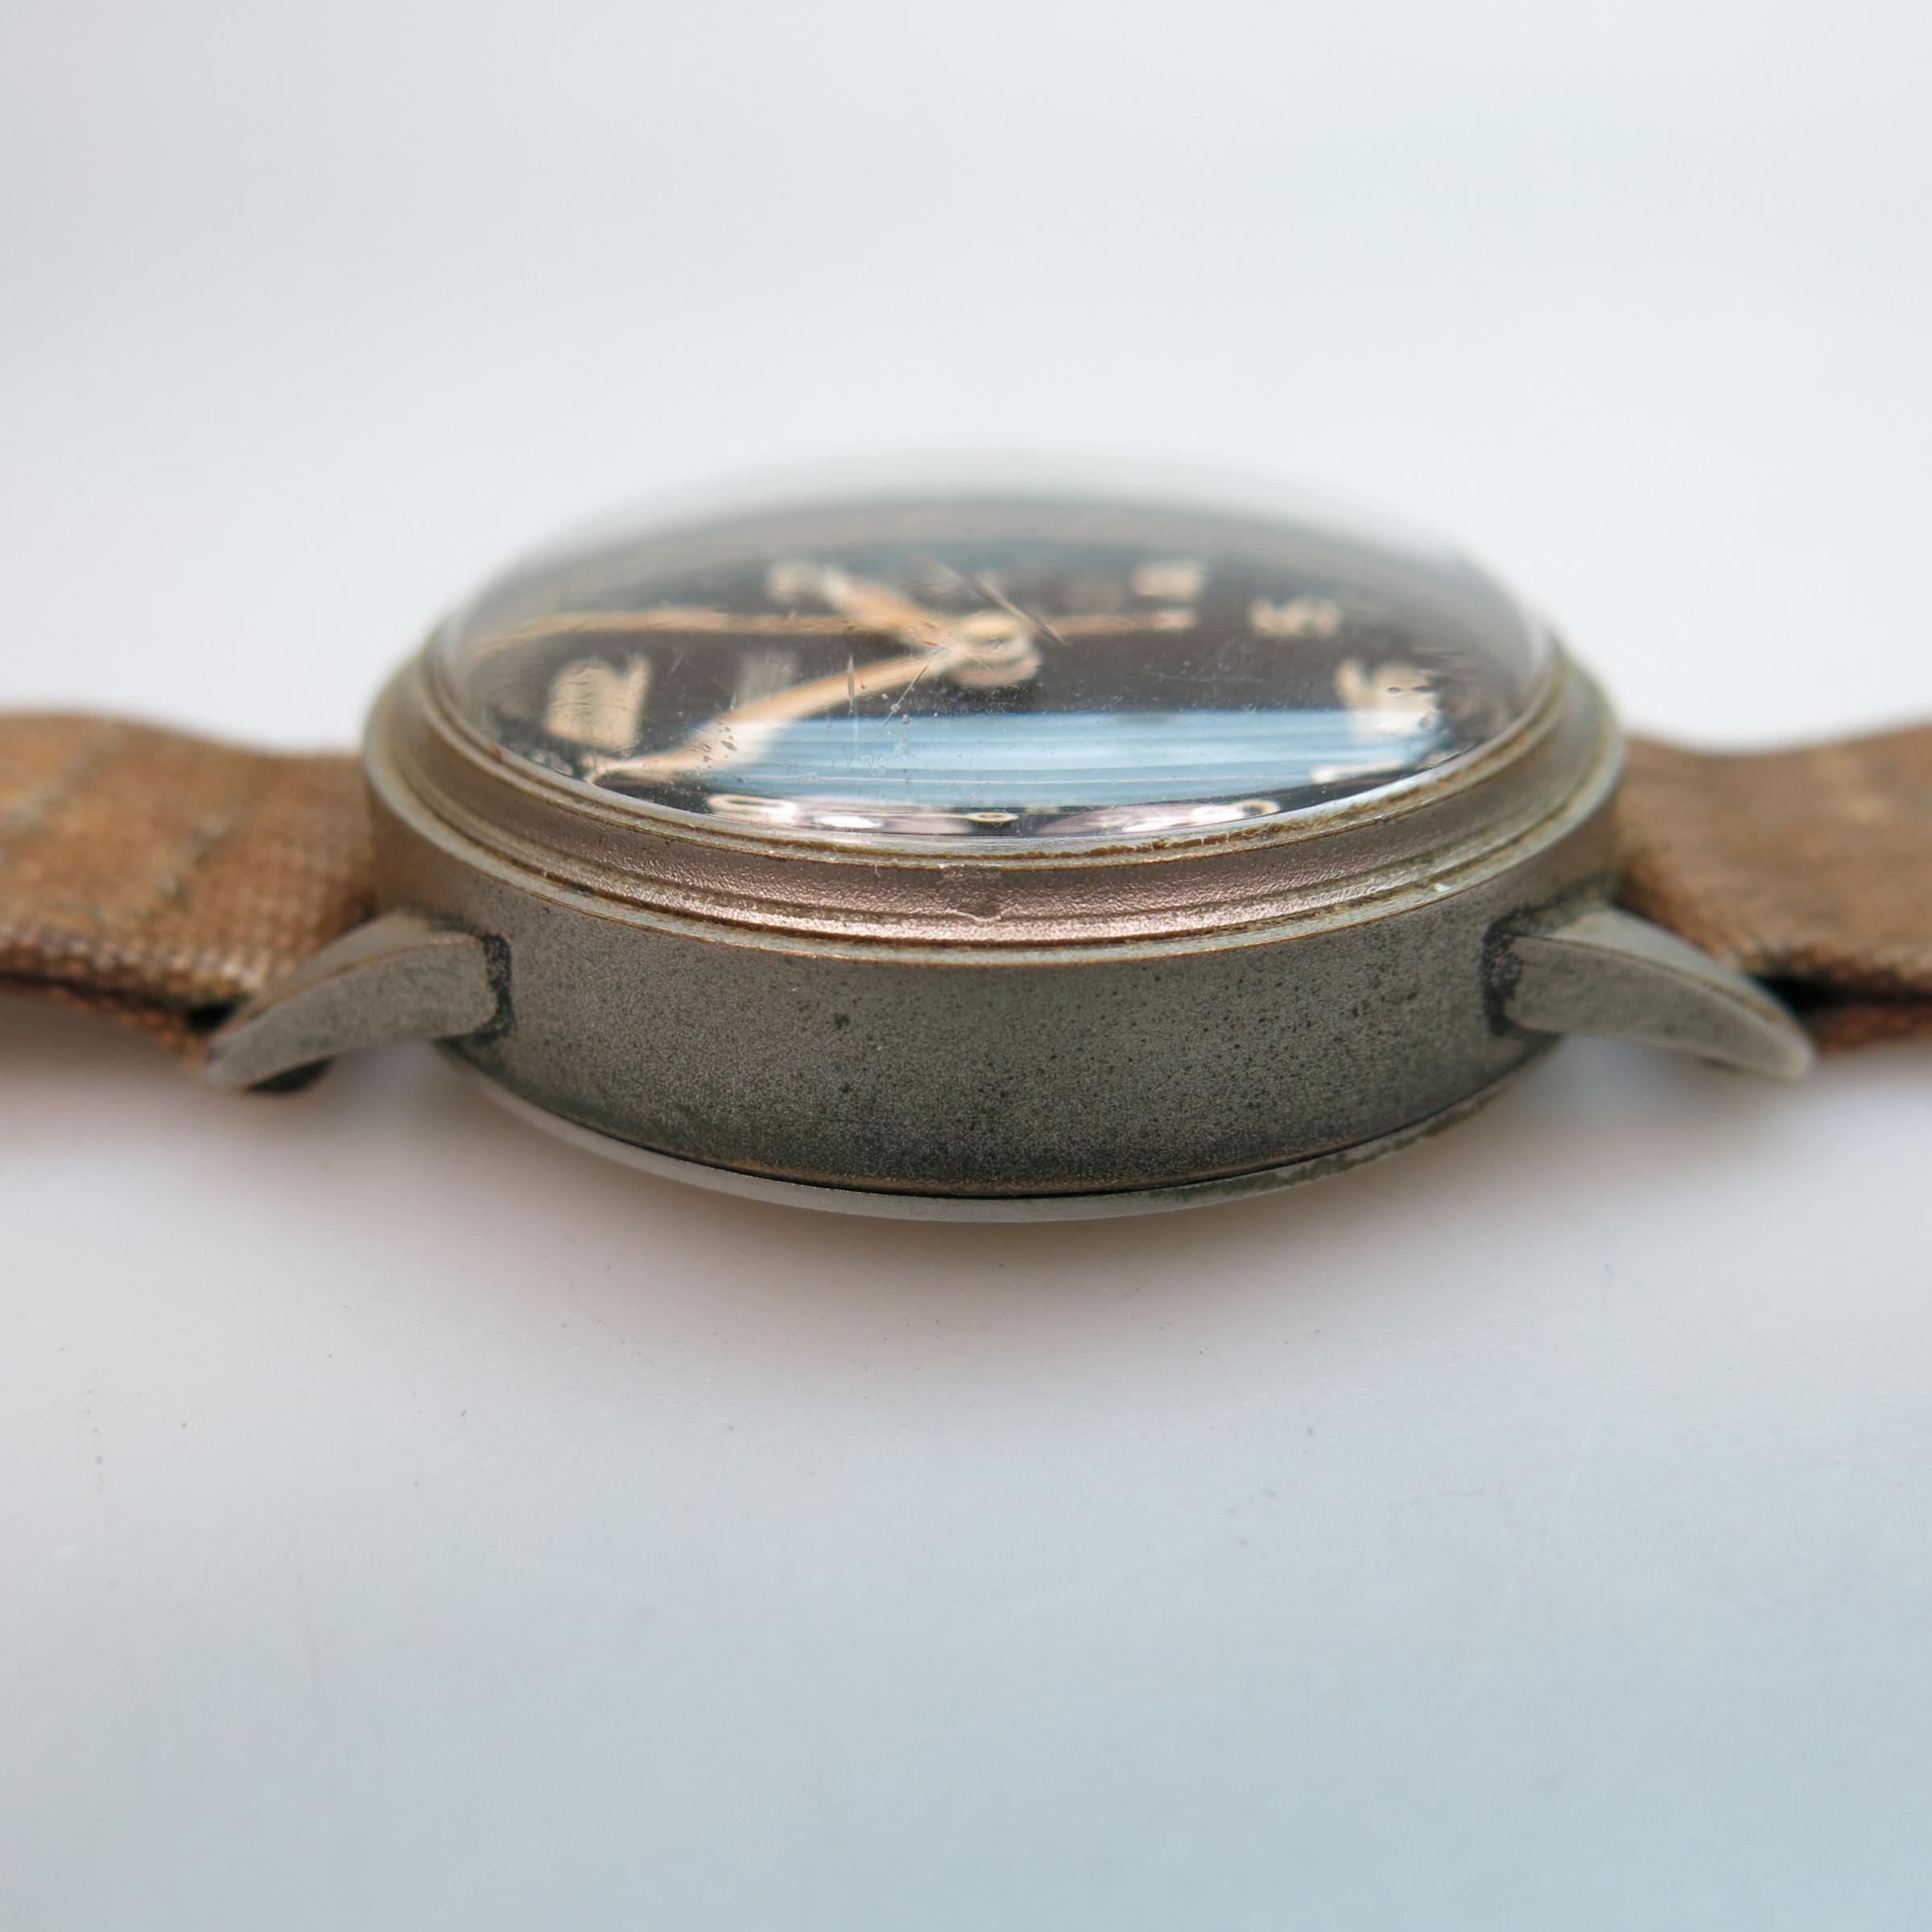 Hanhart Wristwatch With Chronograph